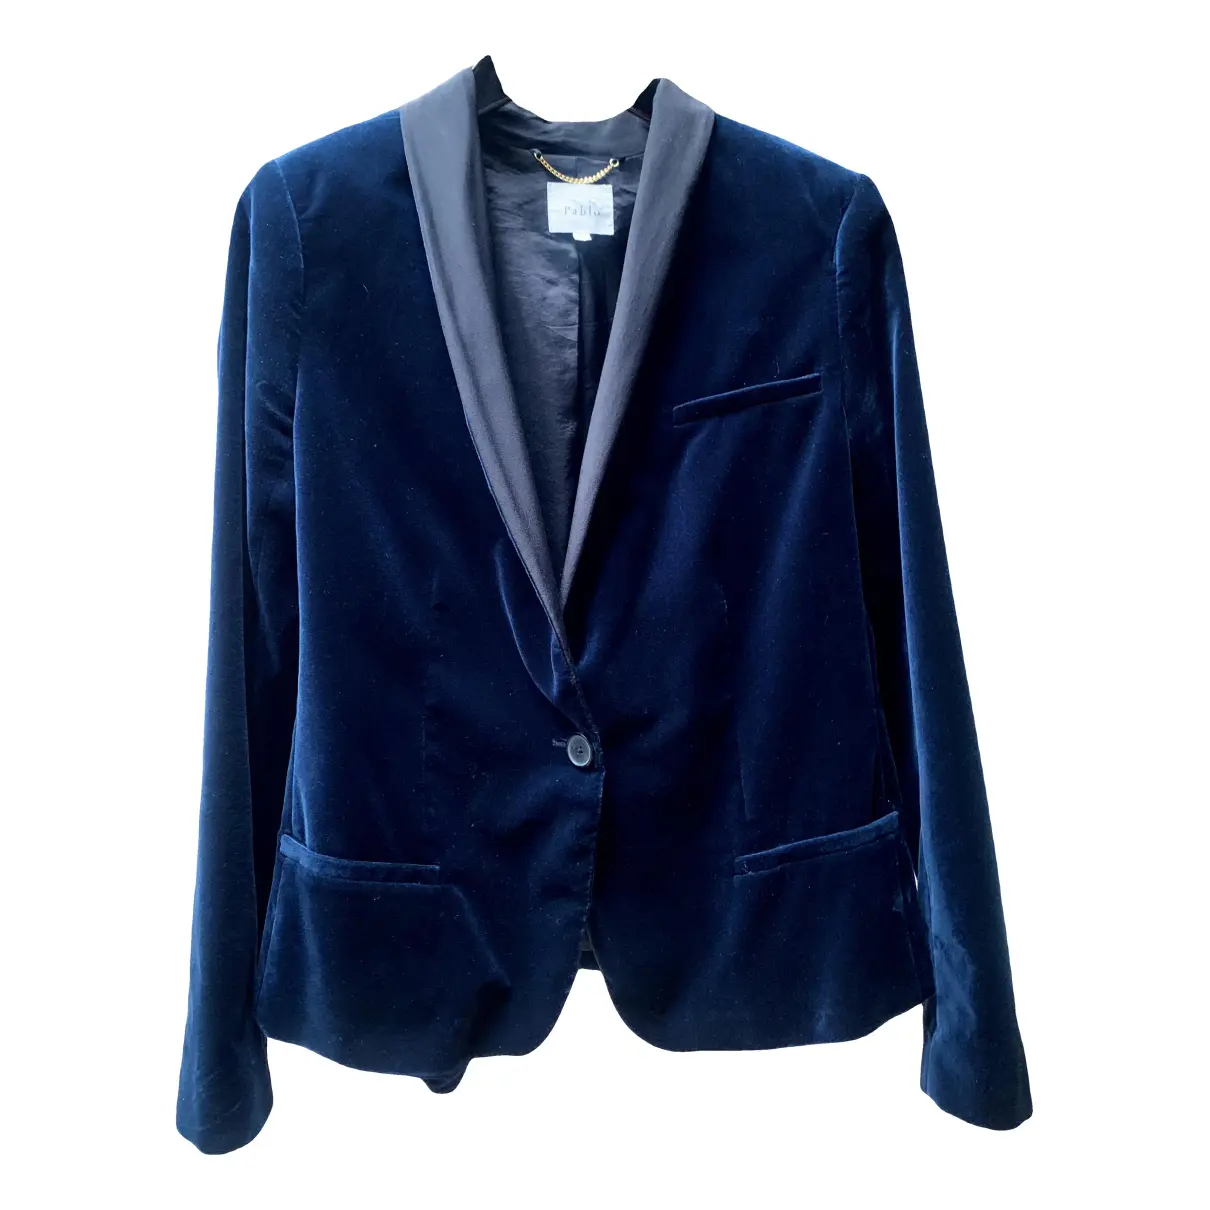 Velvet suit jacket